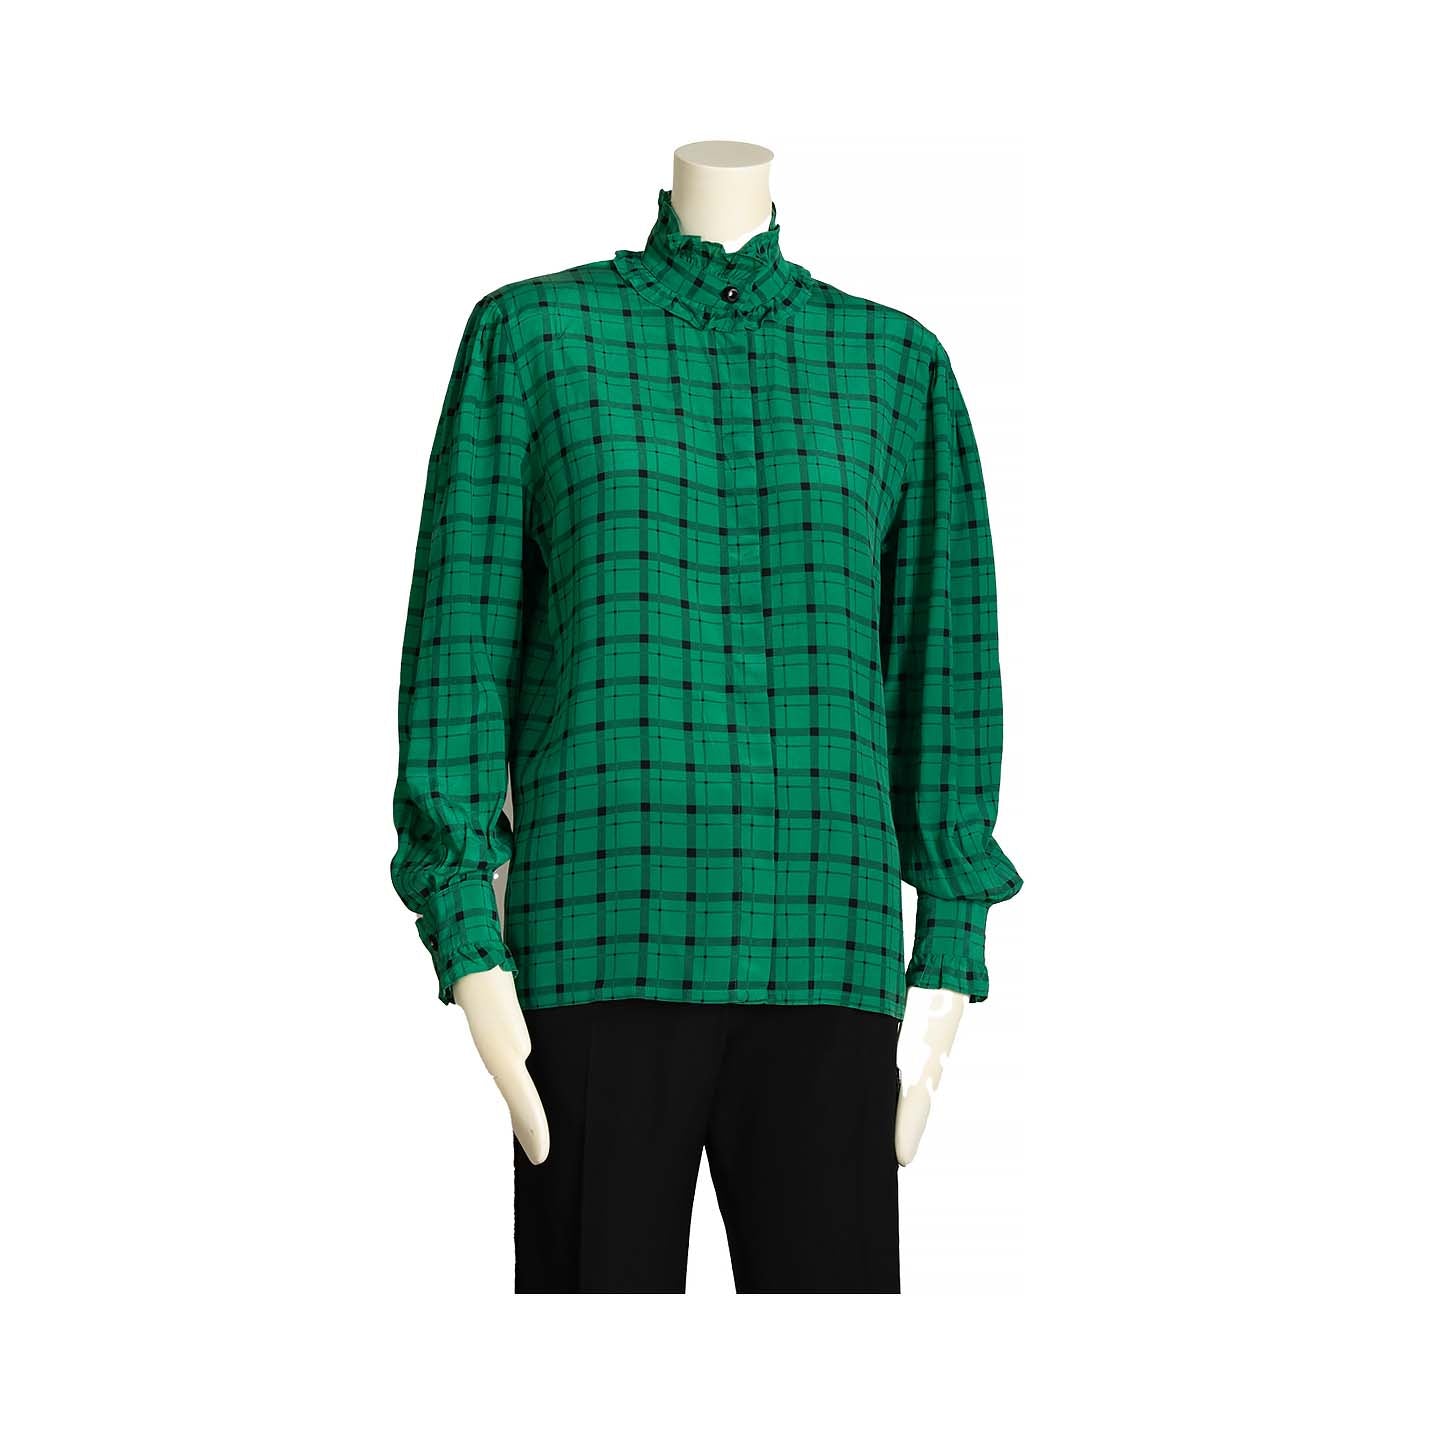 Guy Laroche houndstooth green blouse - M - 1980s